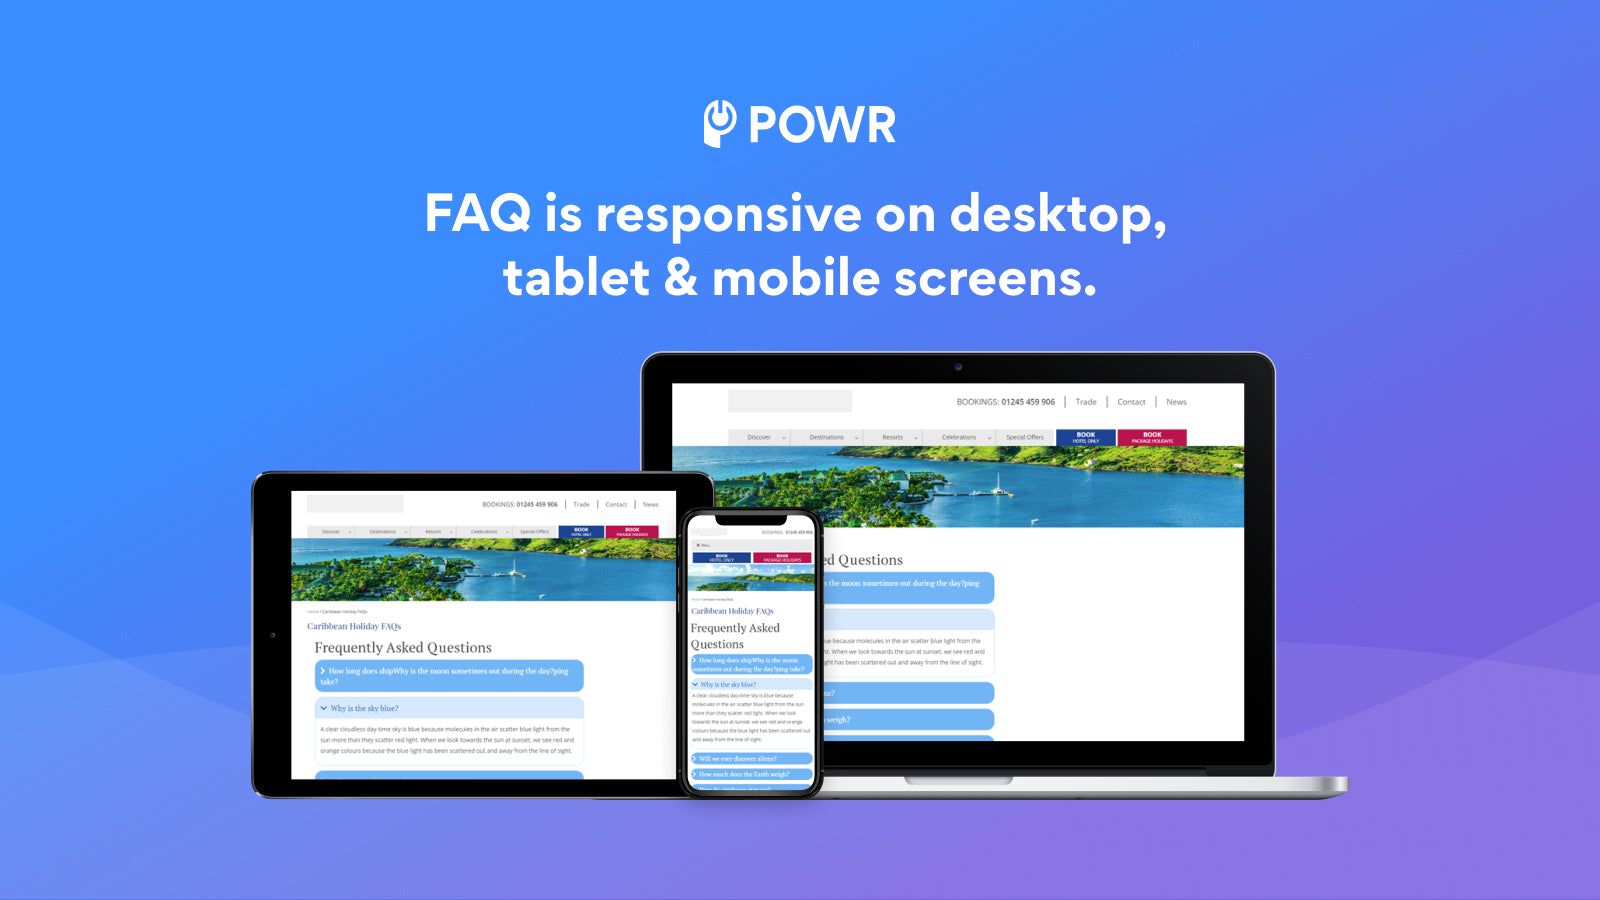 FAQs are responsive on Desktop, Tablet, & Mobile Screens.